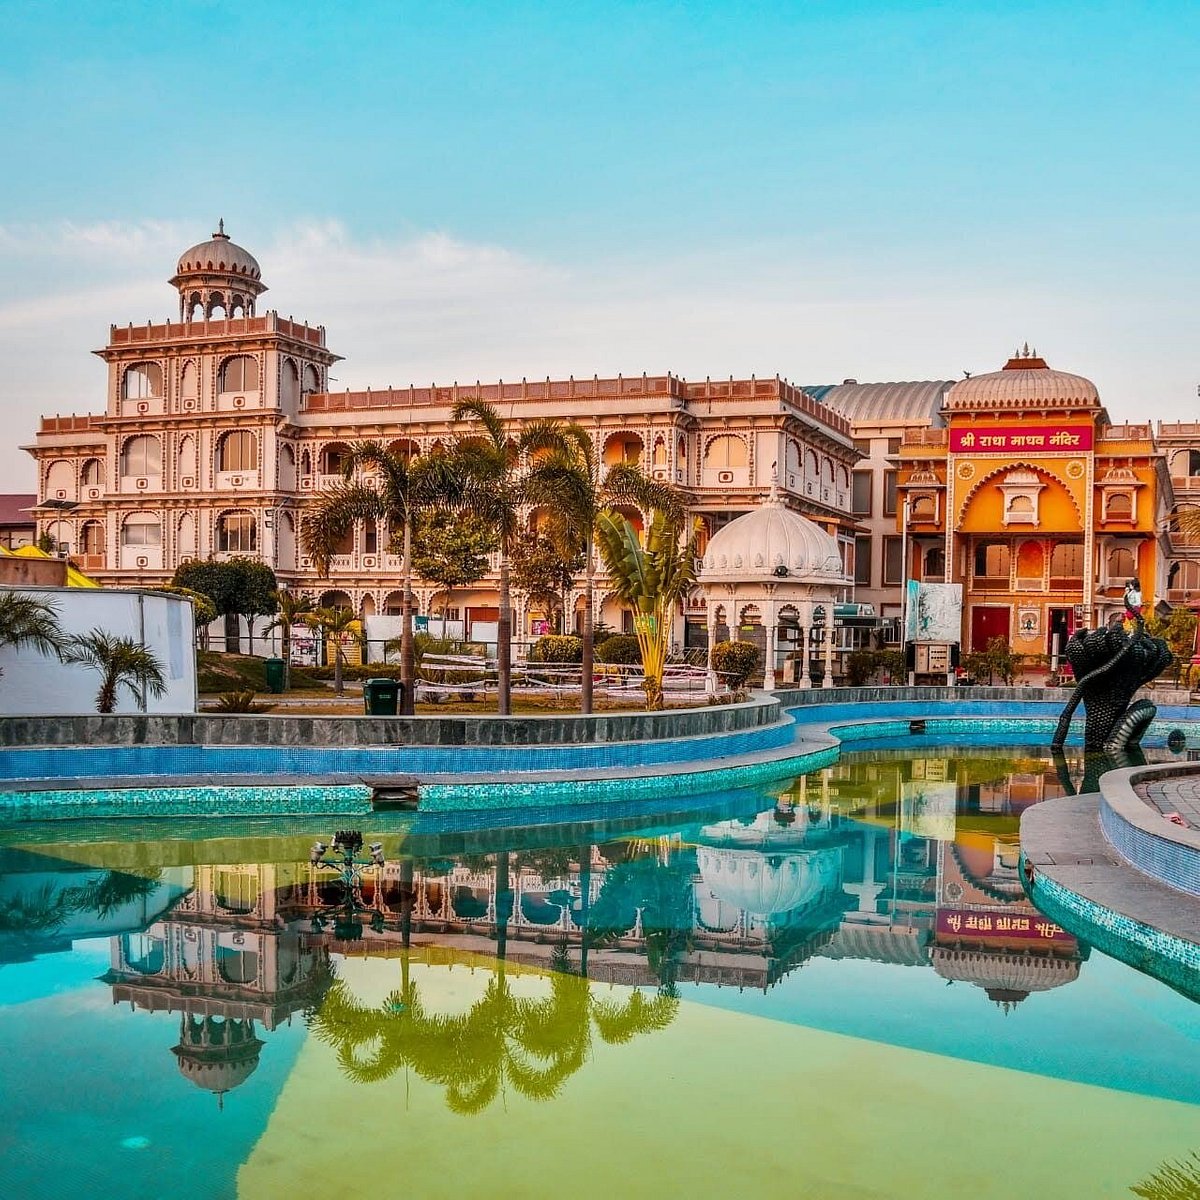 Hare Krishna Mandir, Ahmedabad